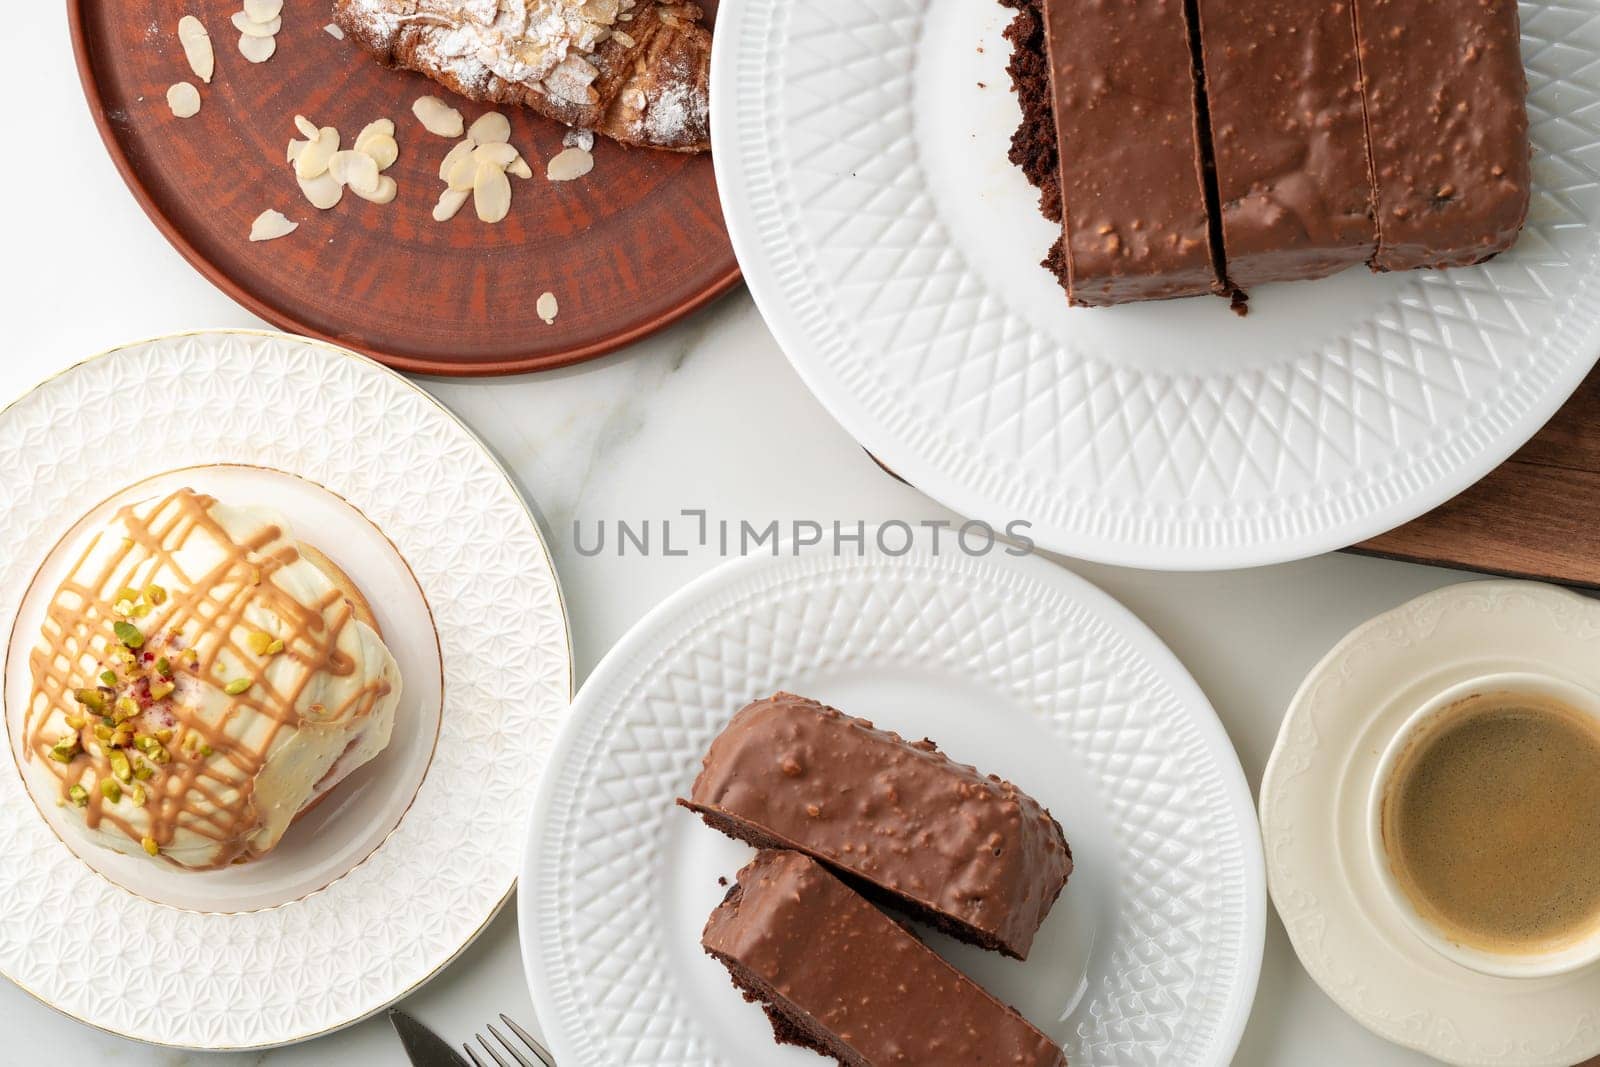 Homemade desserts sponge cake and cinnamon bun on table by Fabrikasimf